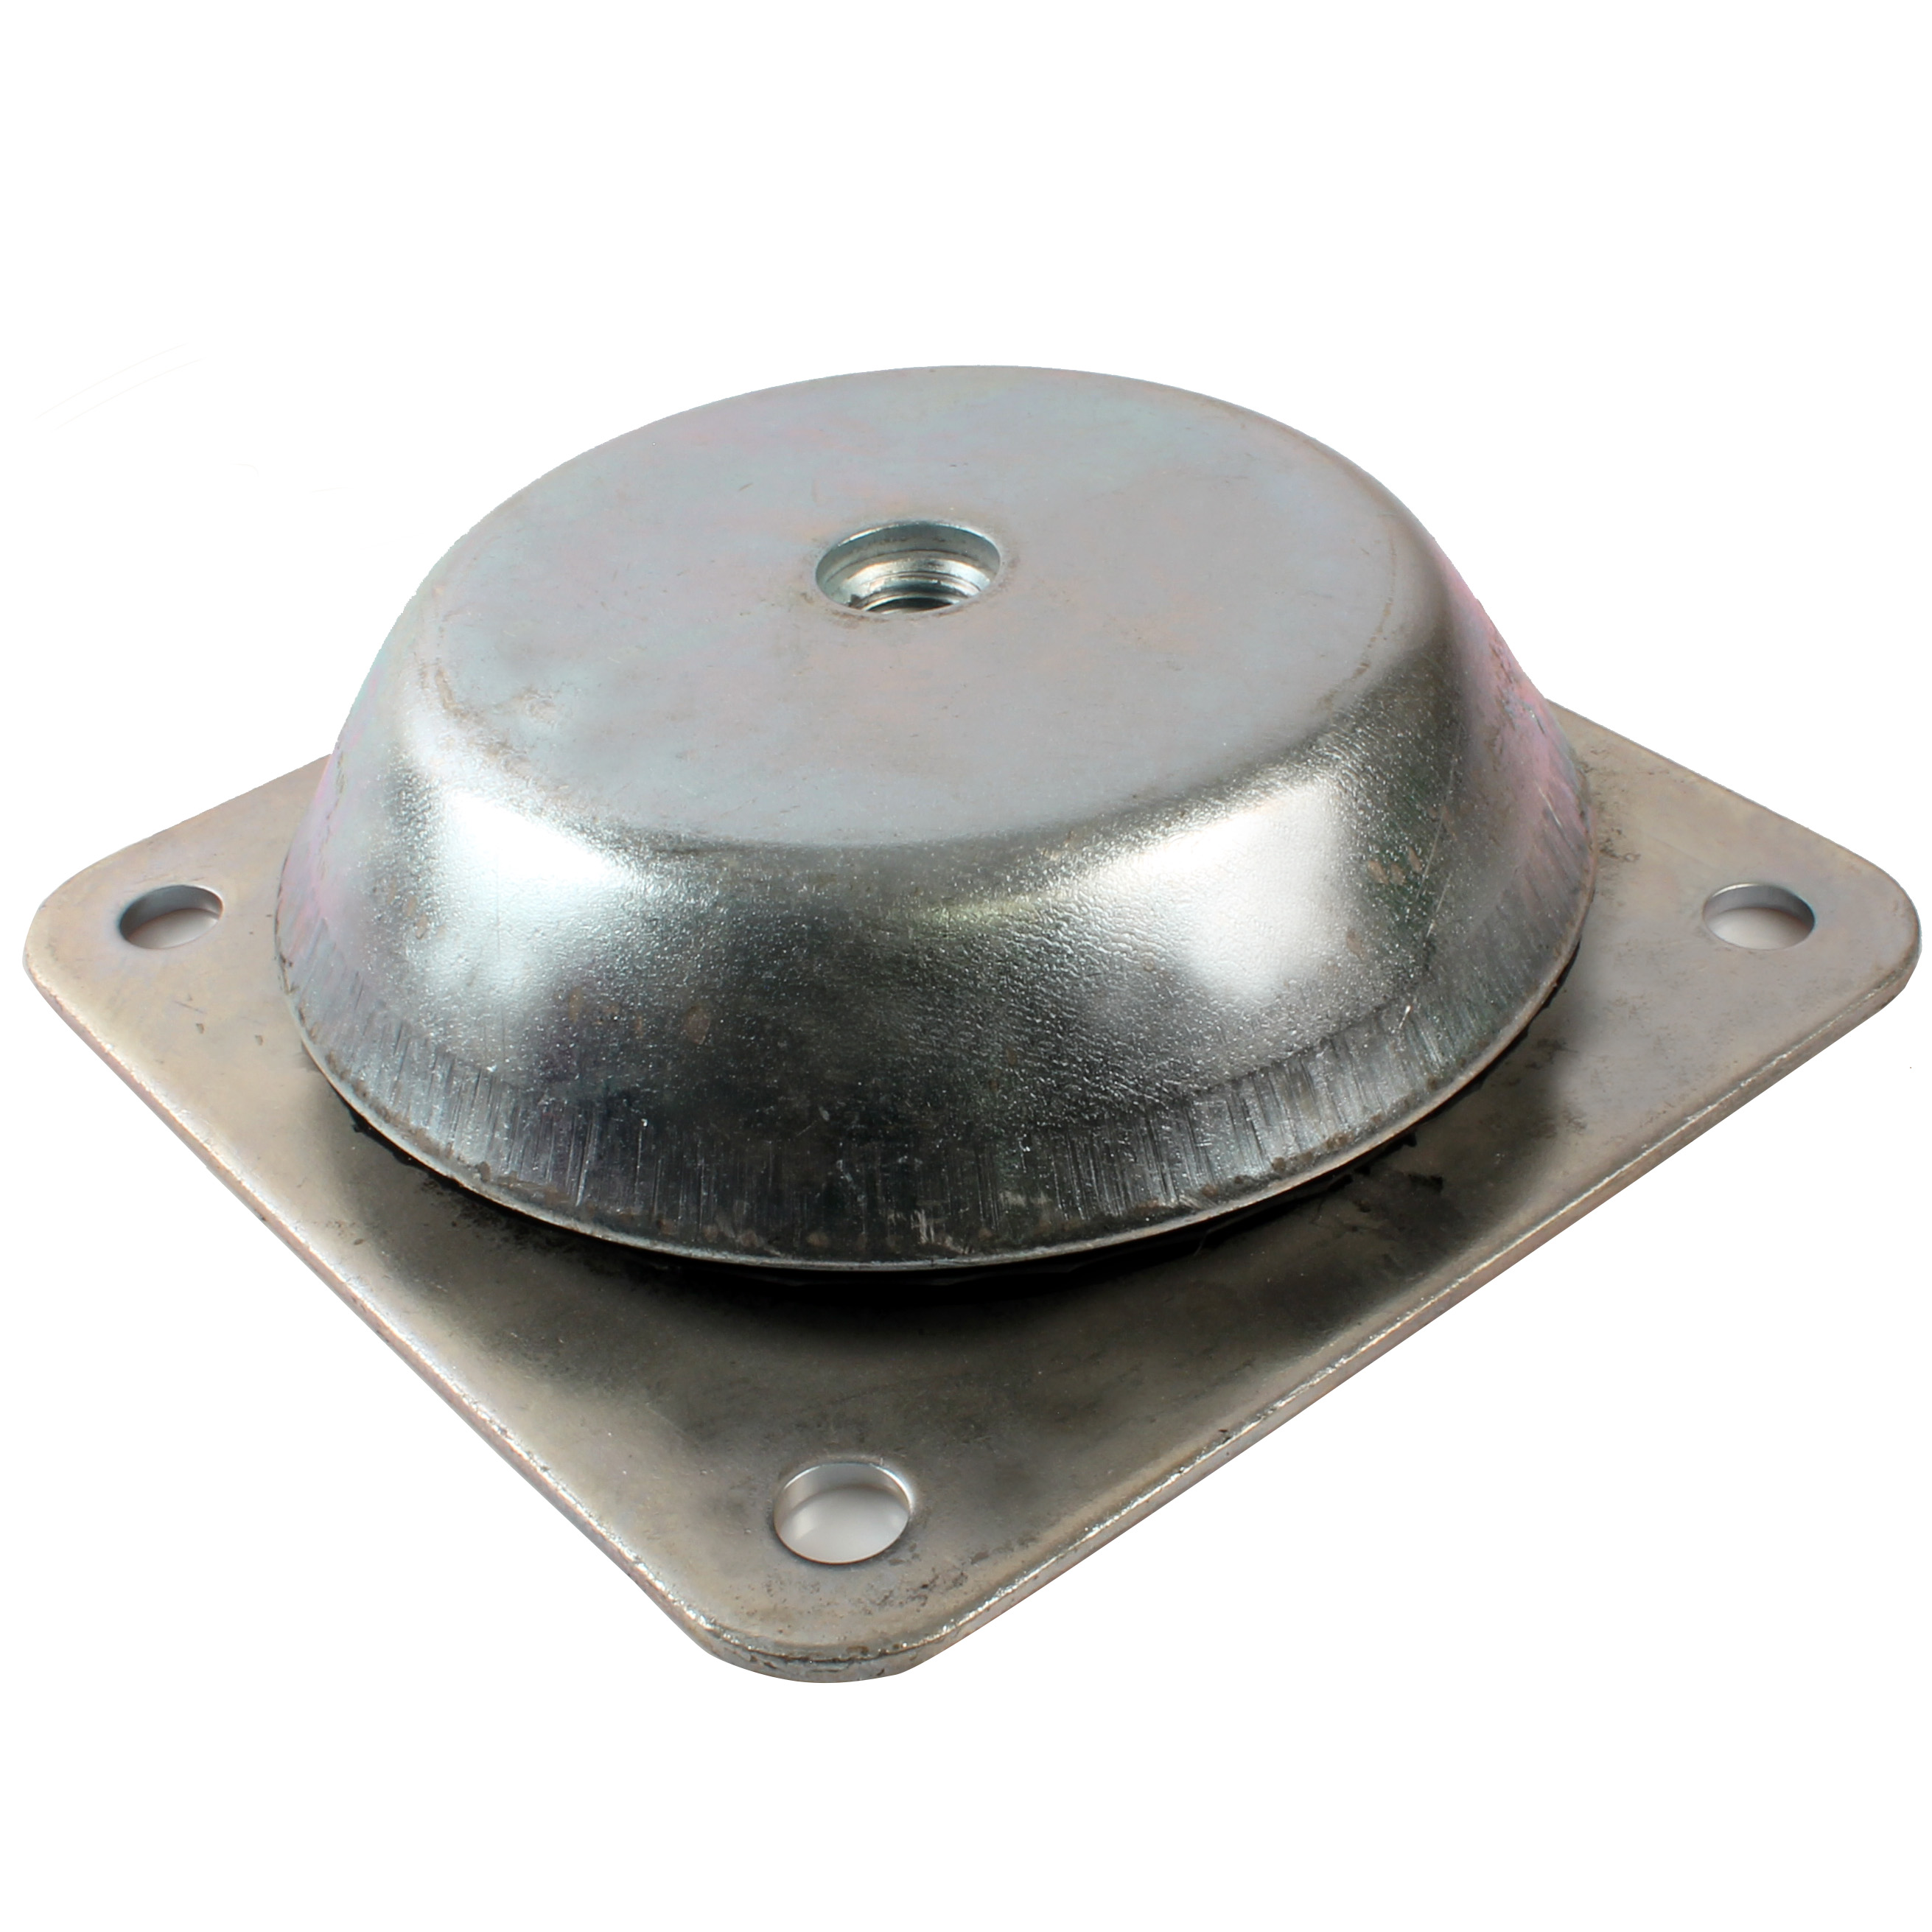 Anti-vibration machine mount Format:Square base plate Fixing:4 fixing holes